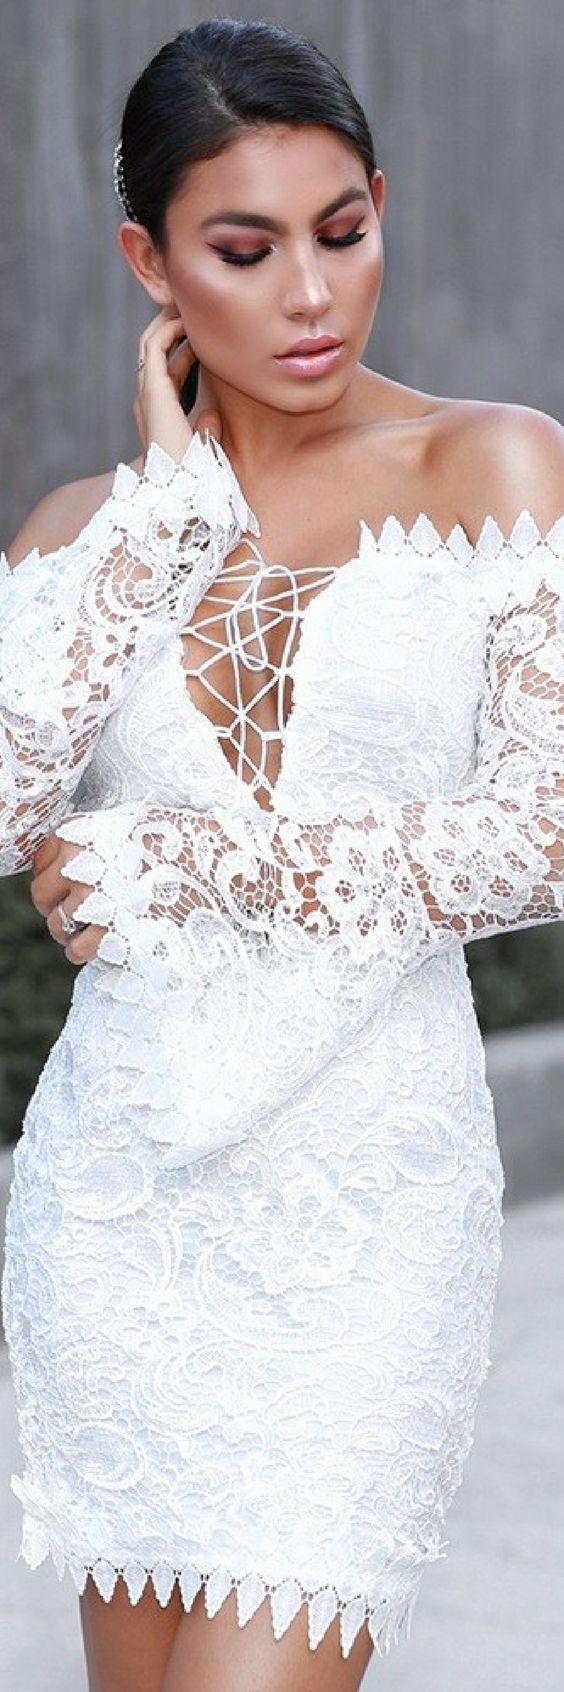 Wedding - Lace Crochet Off Shoulder Mini Dress - Outfit Idea By Christina Amato